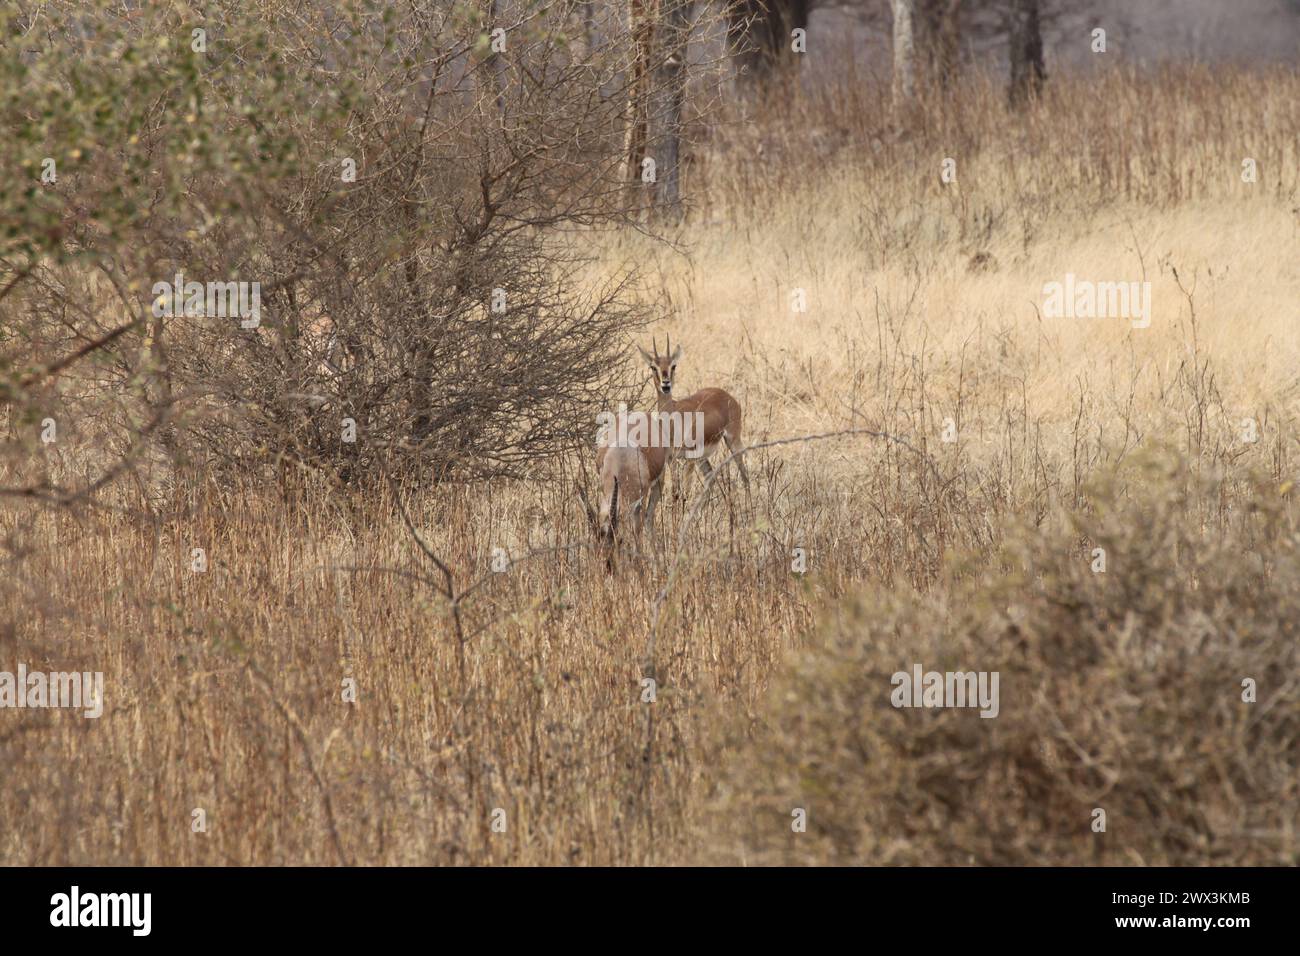 Chinkara or Indian gazelle at ranthambore national park, India Stock Photo